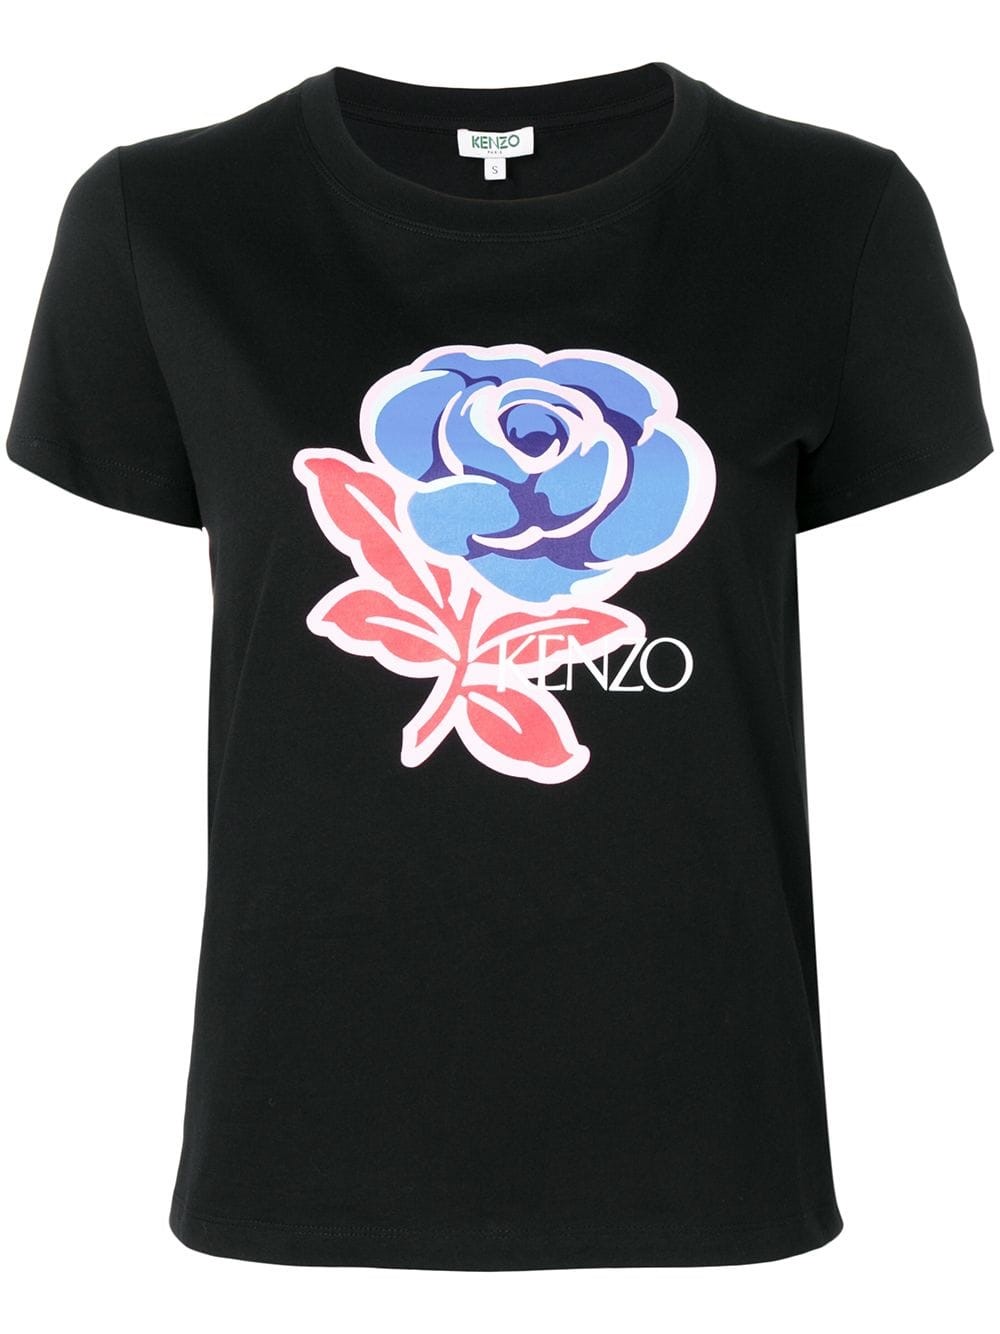 tee shirt kenzo rose